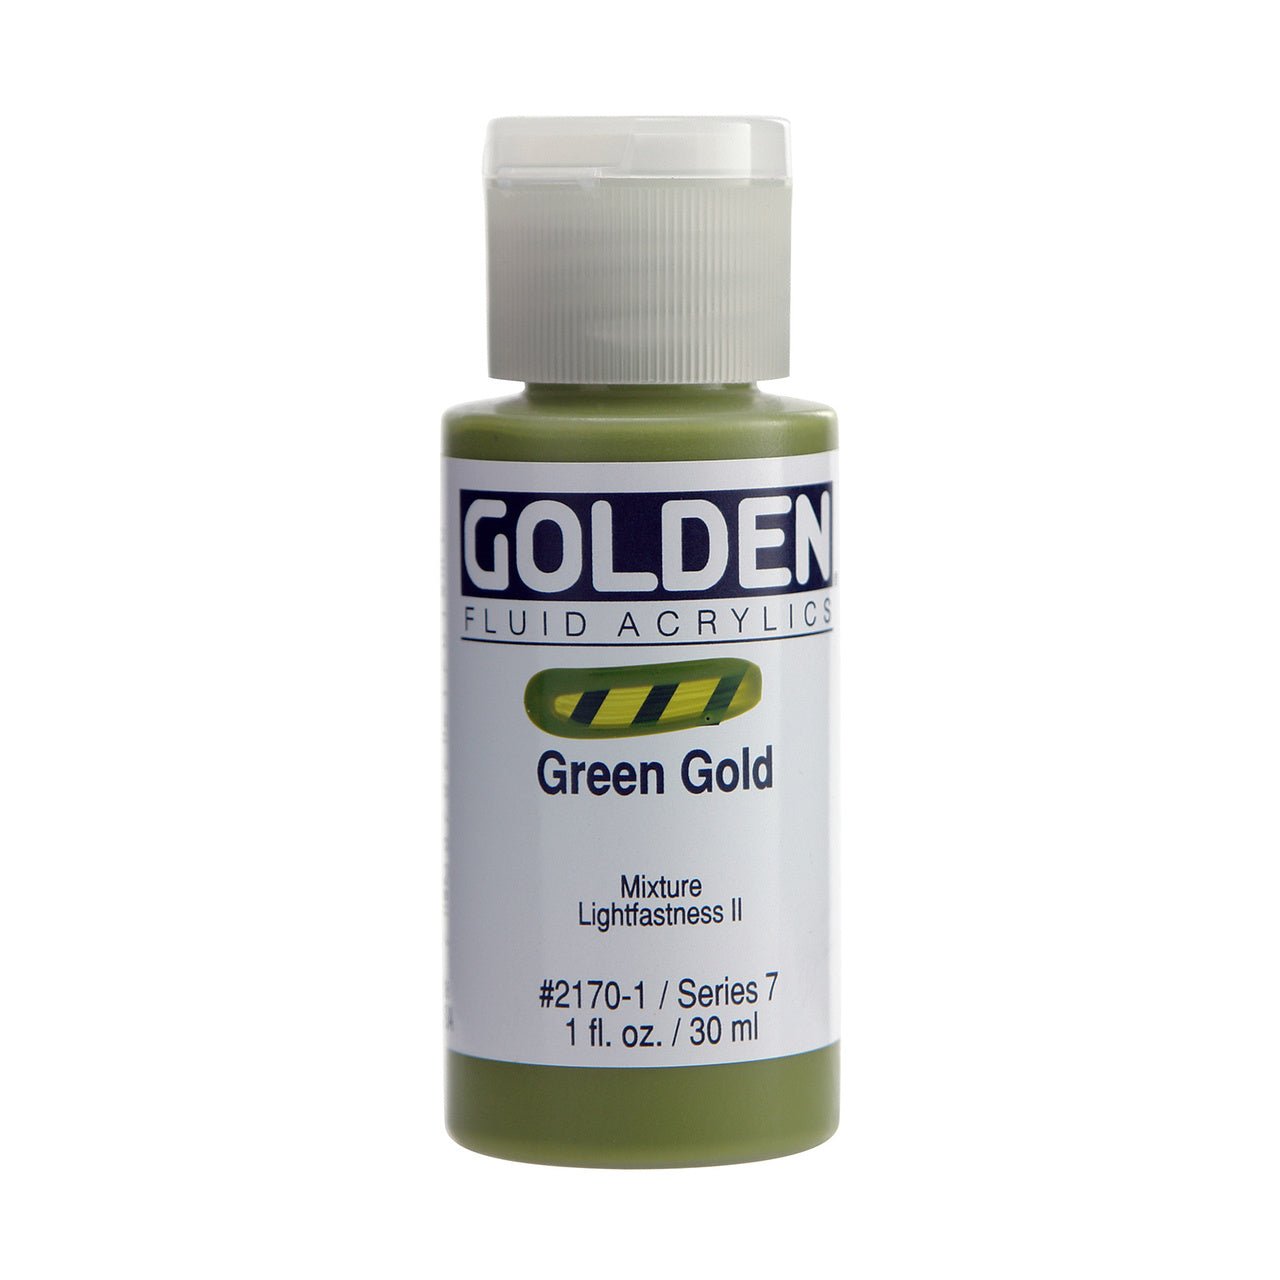 Golden Fluid Acrylic Green Gold 1 oz - merriartist.com